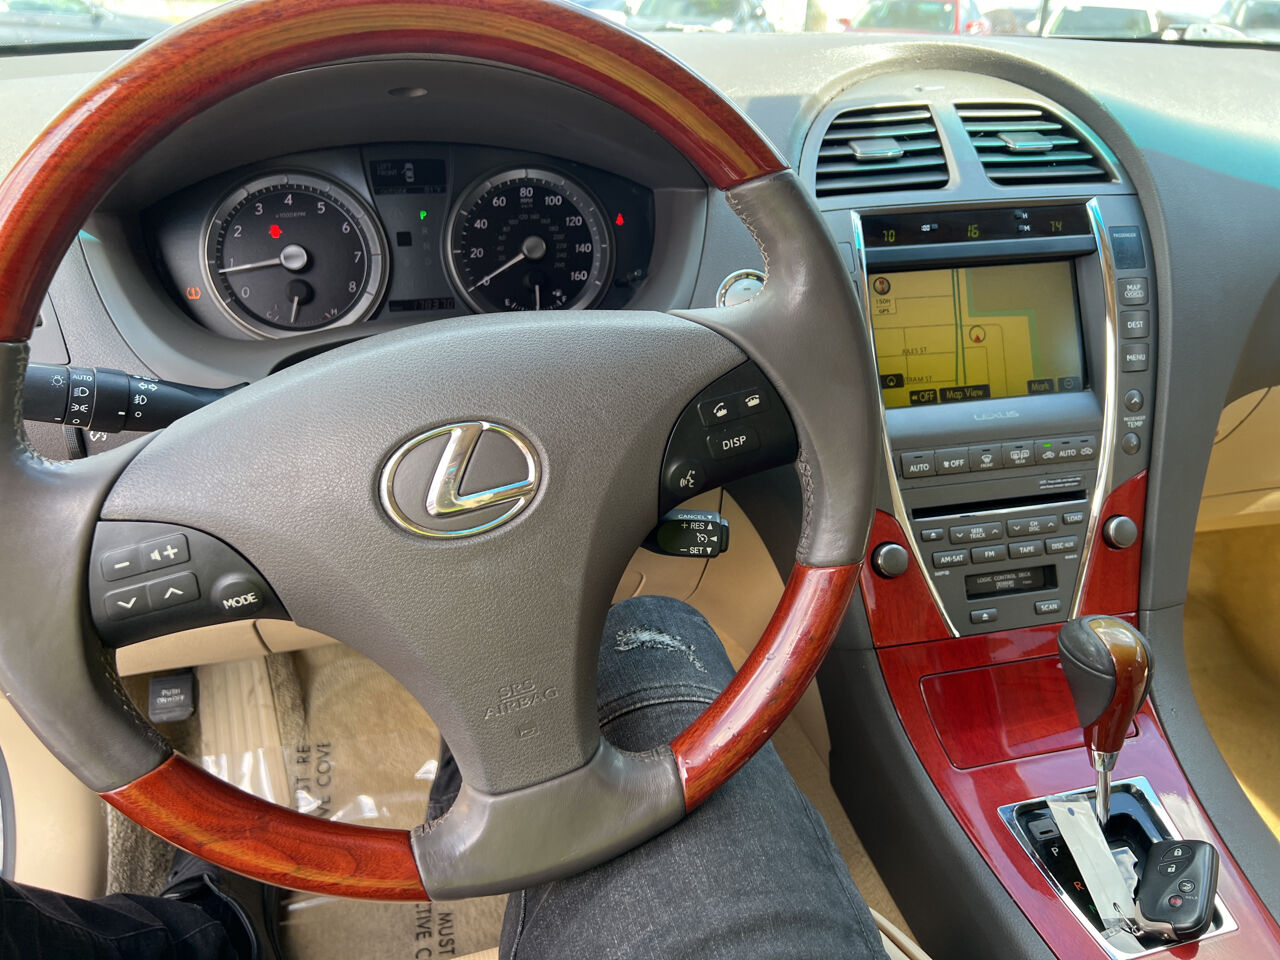 2009 LEXUS ES Sedan - $7,900